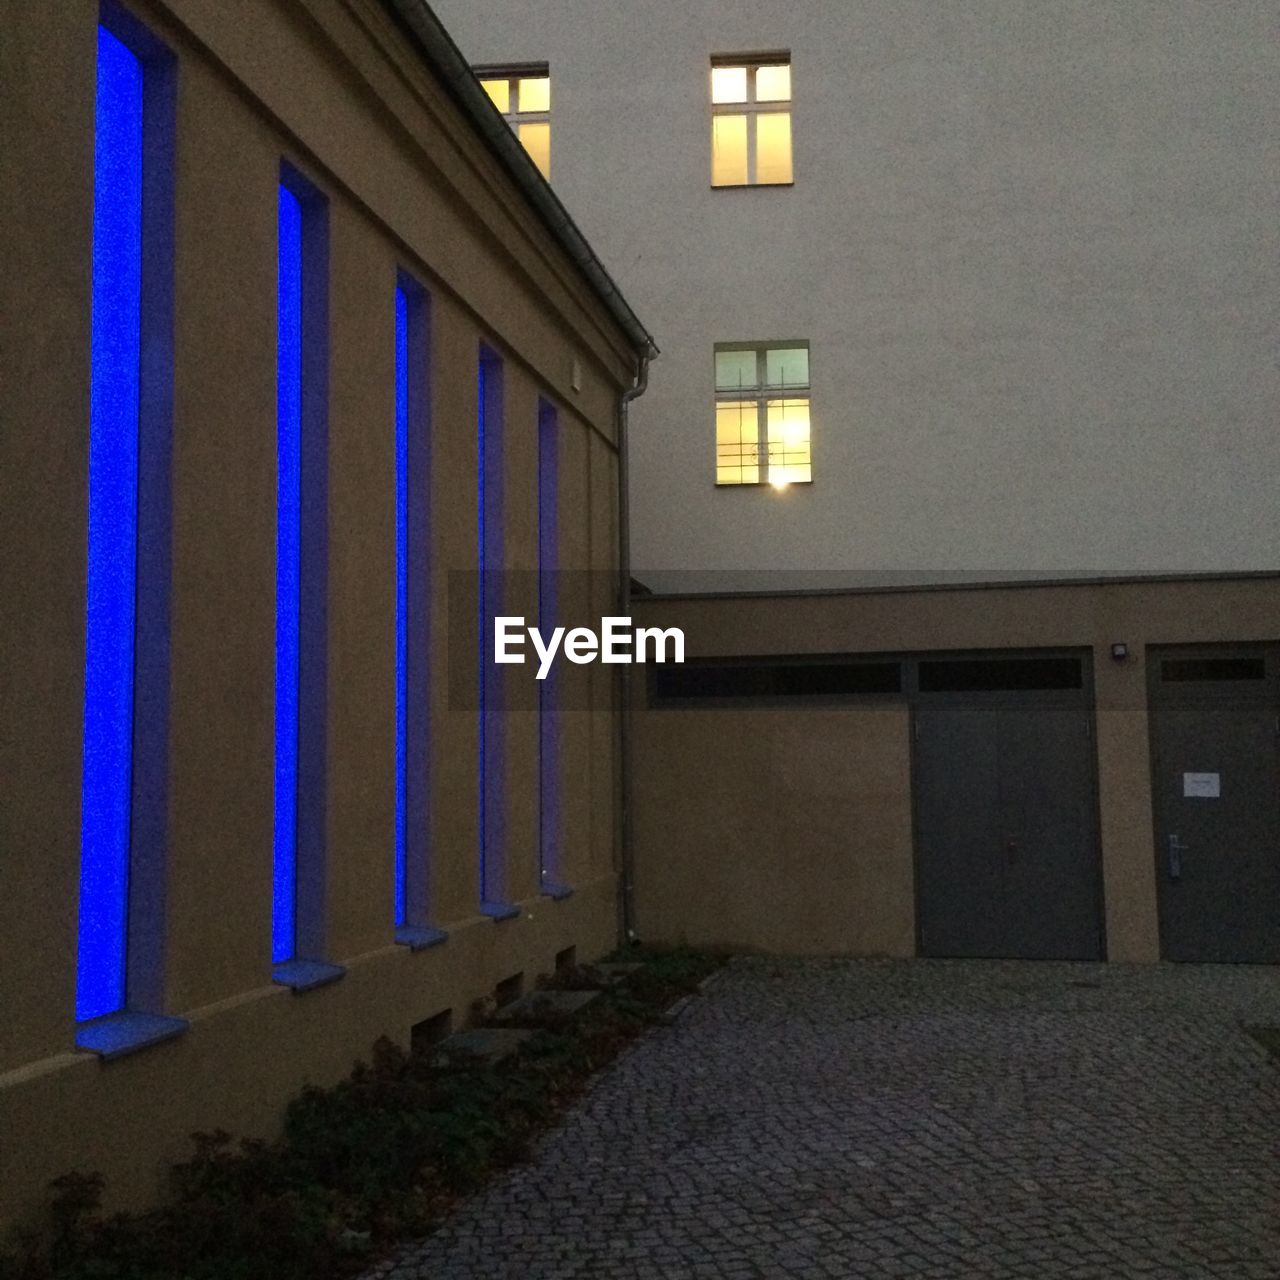 Illuminated lights in buildings